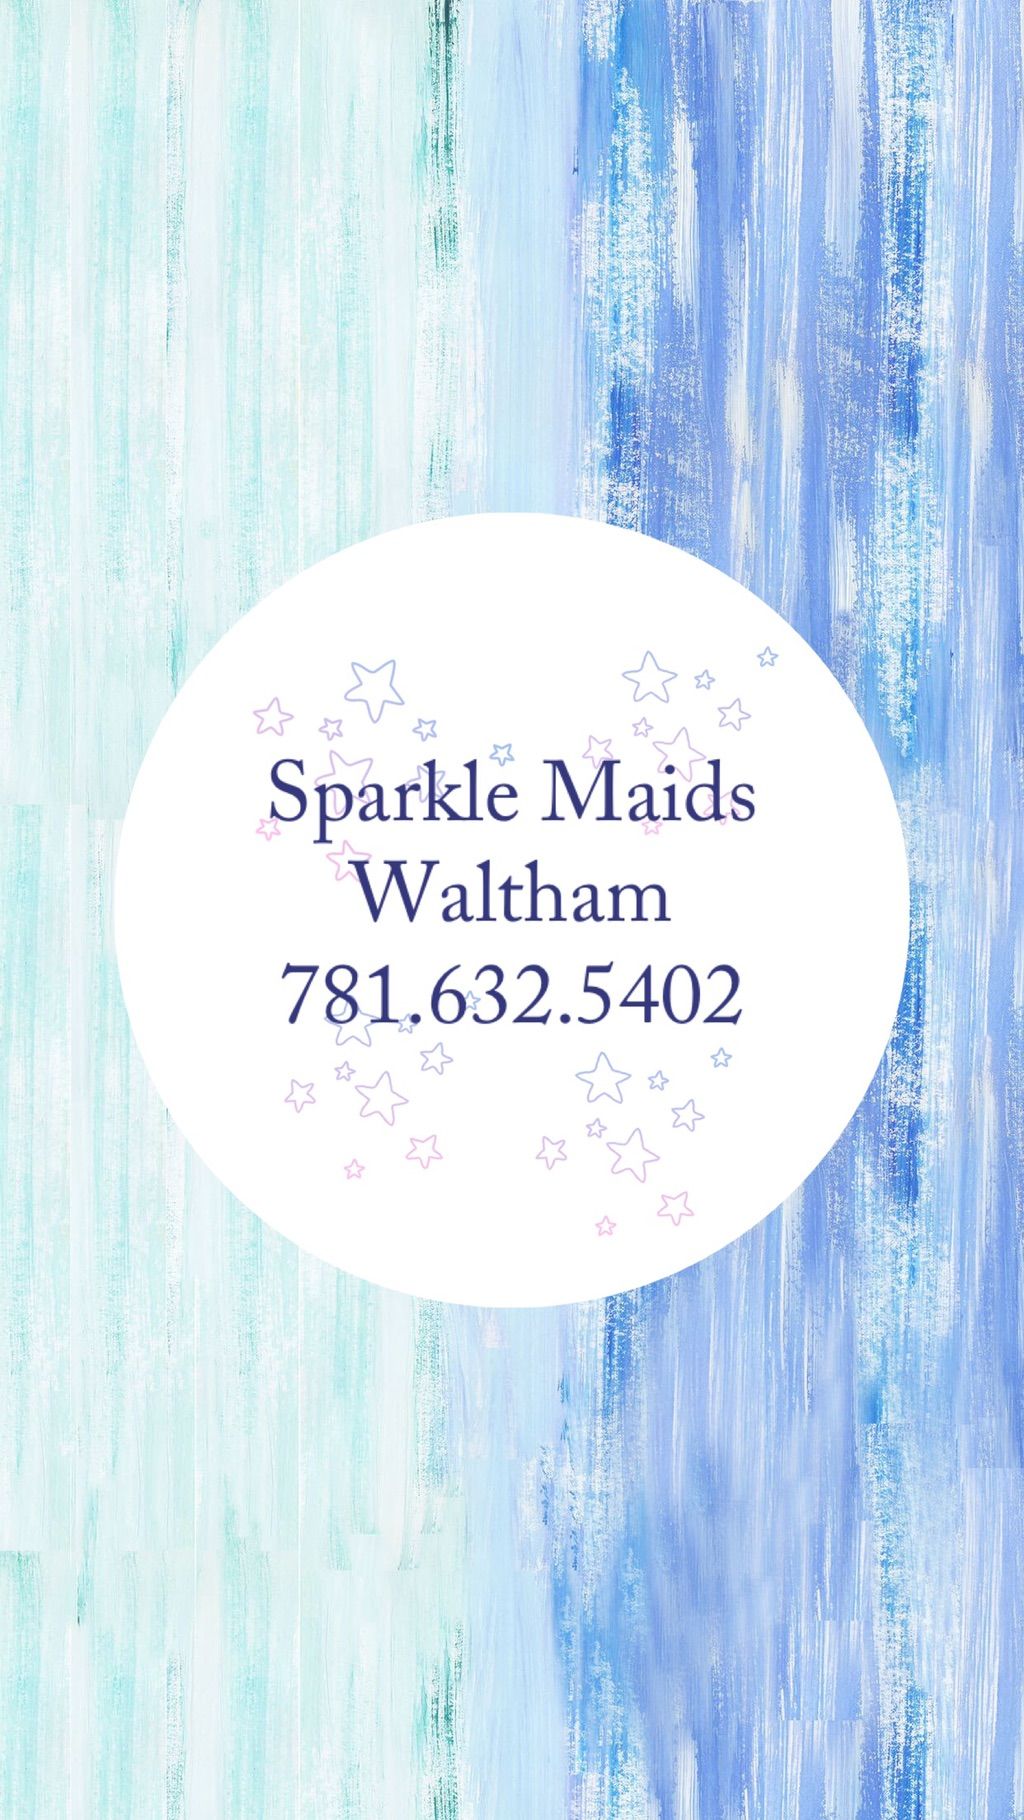 Sparkle Maids Waltham